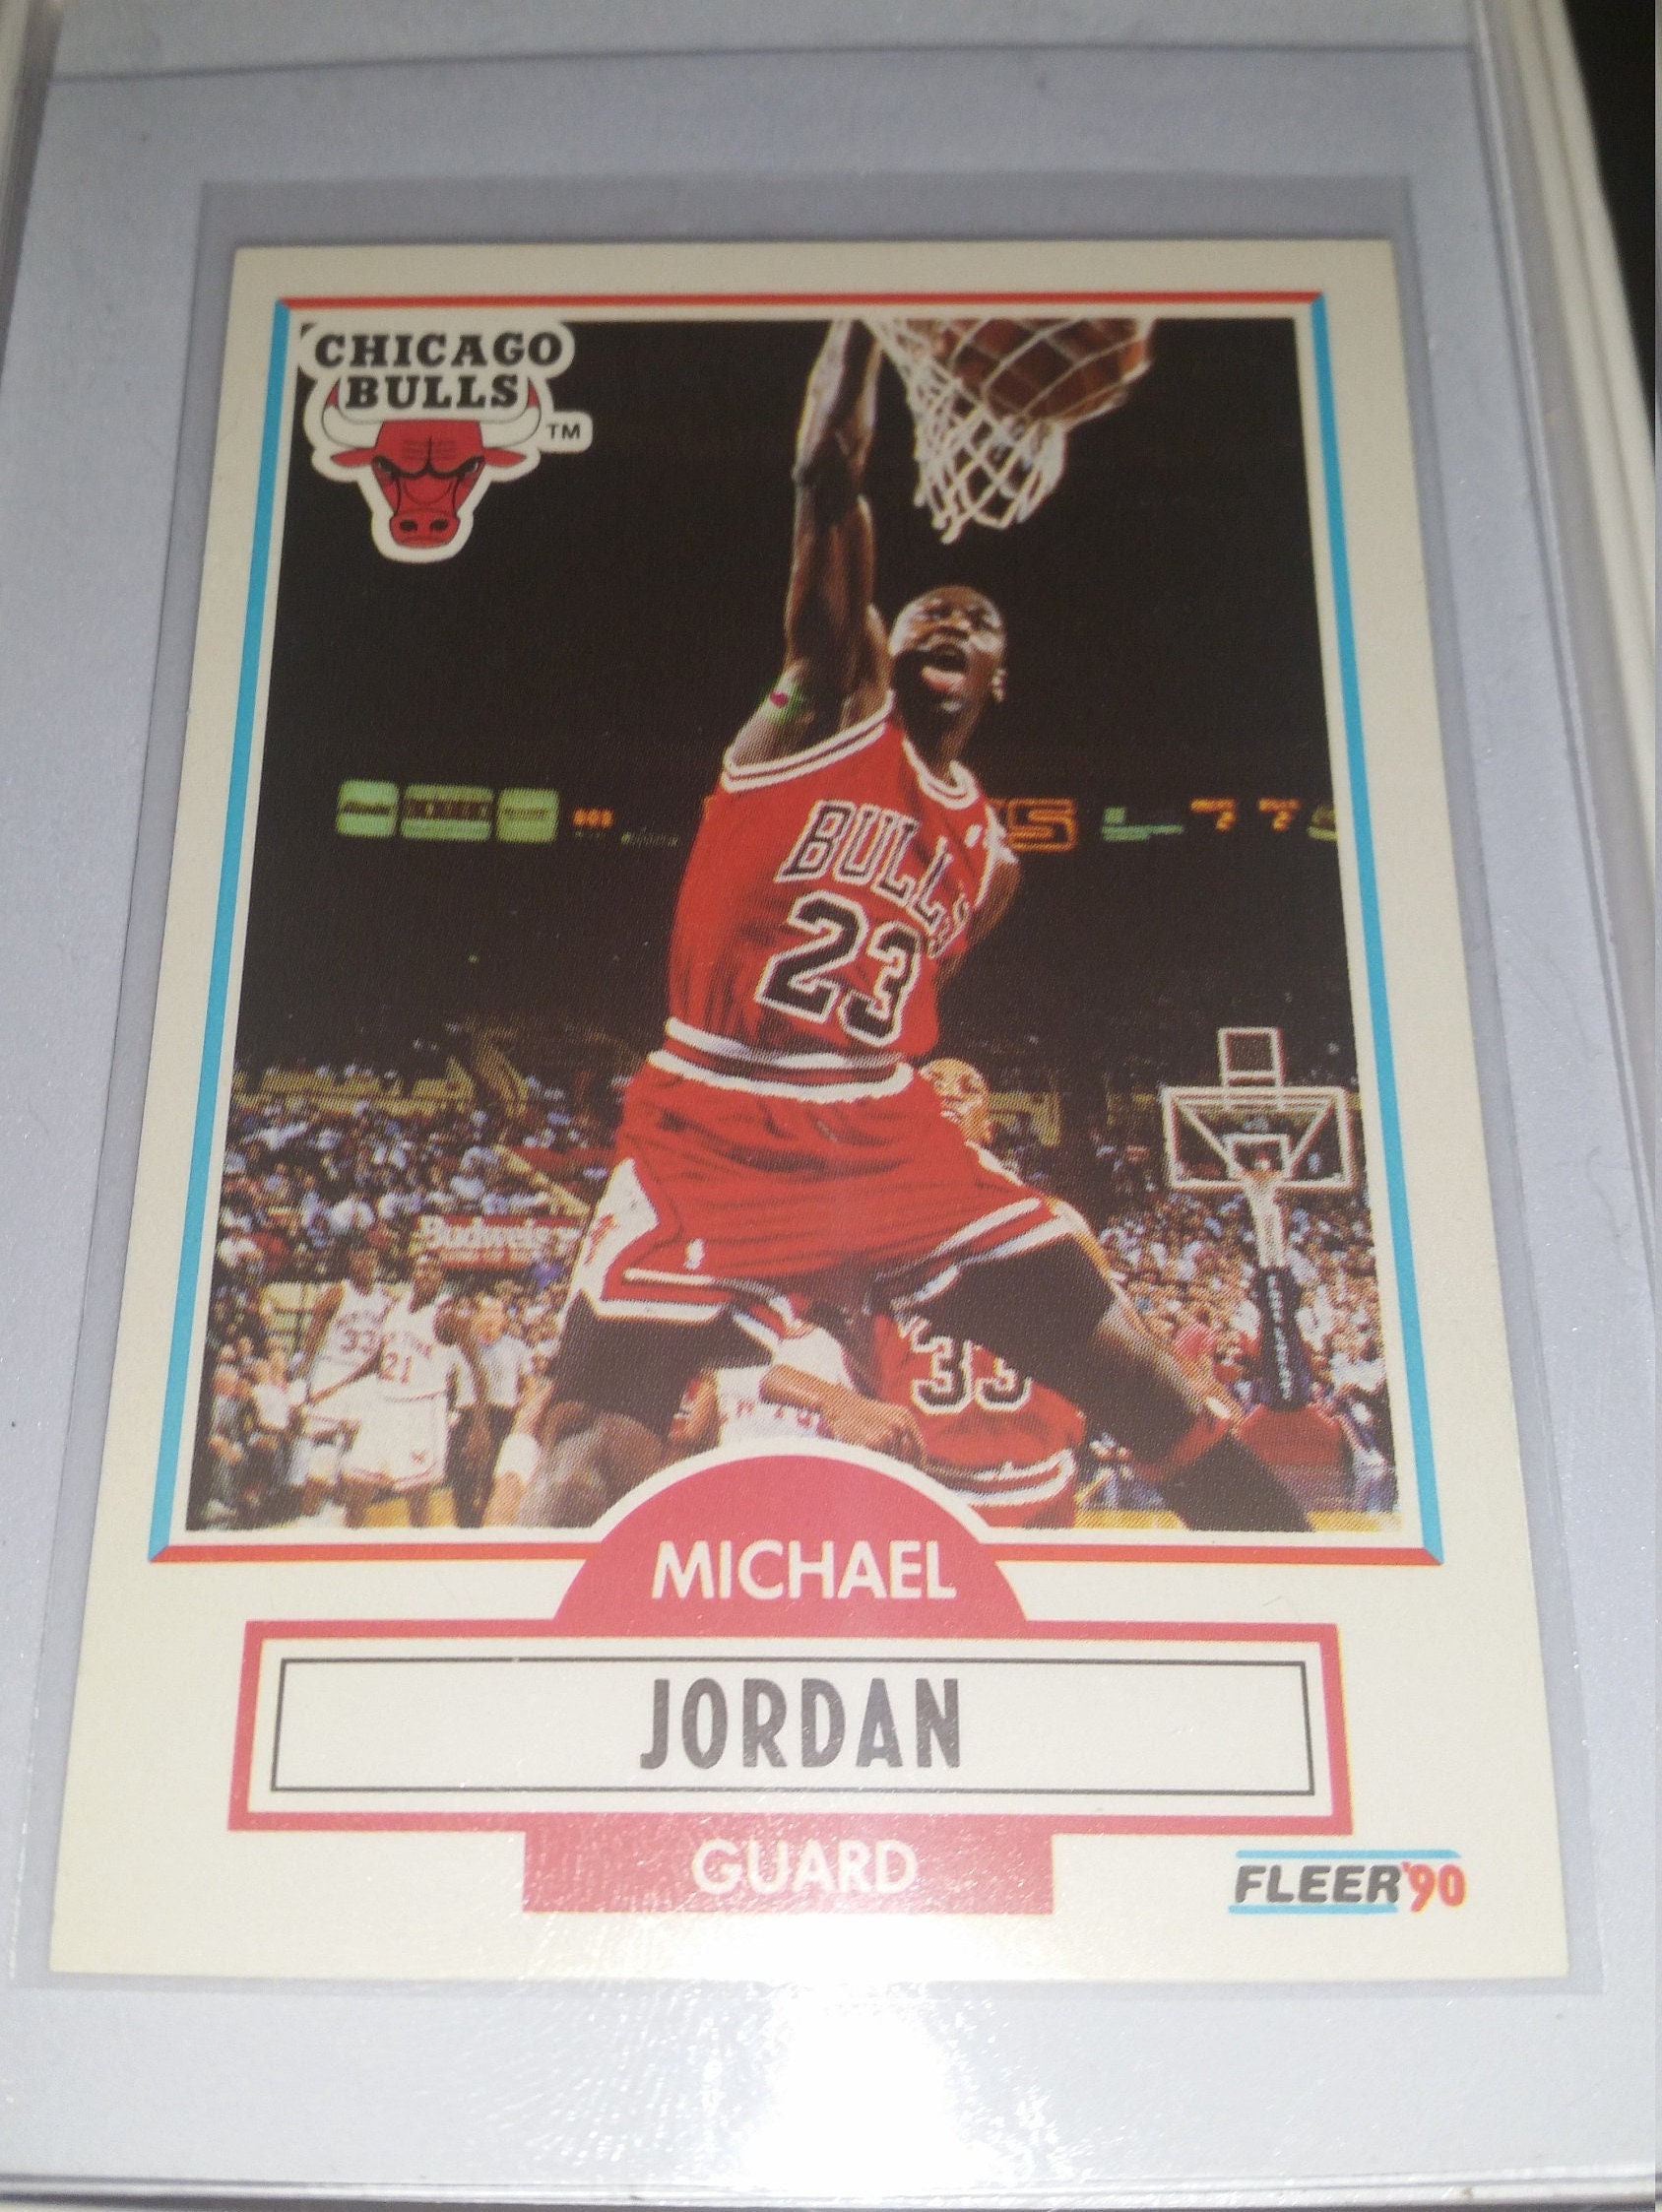 Michael Jordan Magic Johnson Larry Bird 4-pack Sam Vincent Card Has MJ